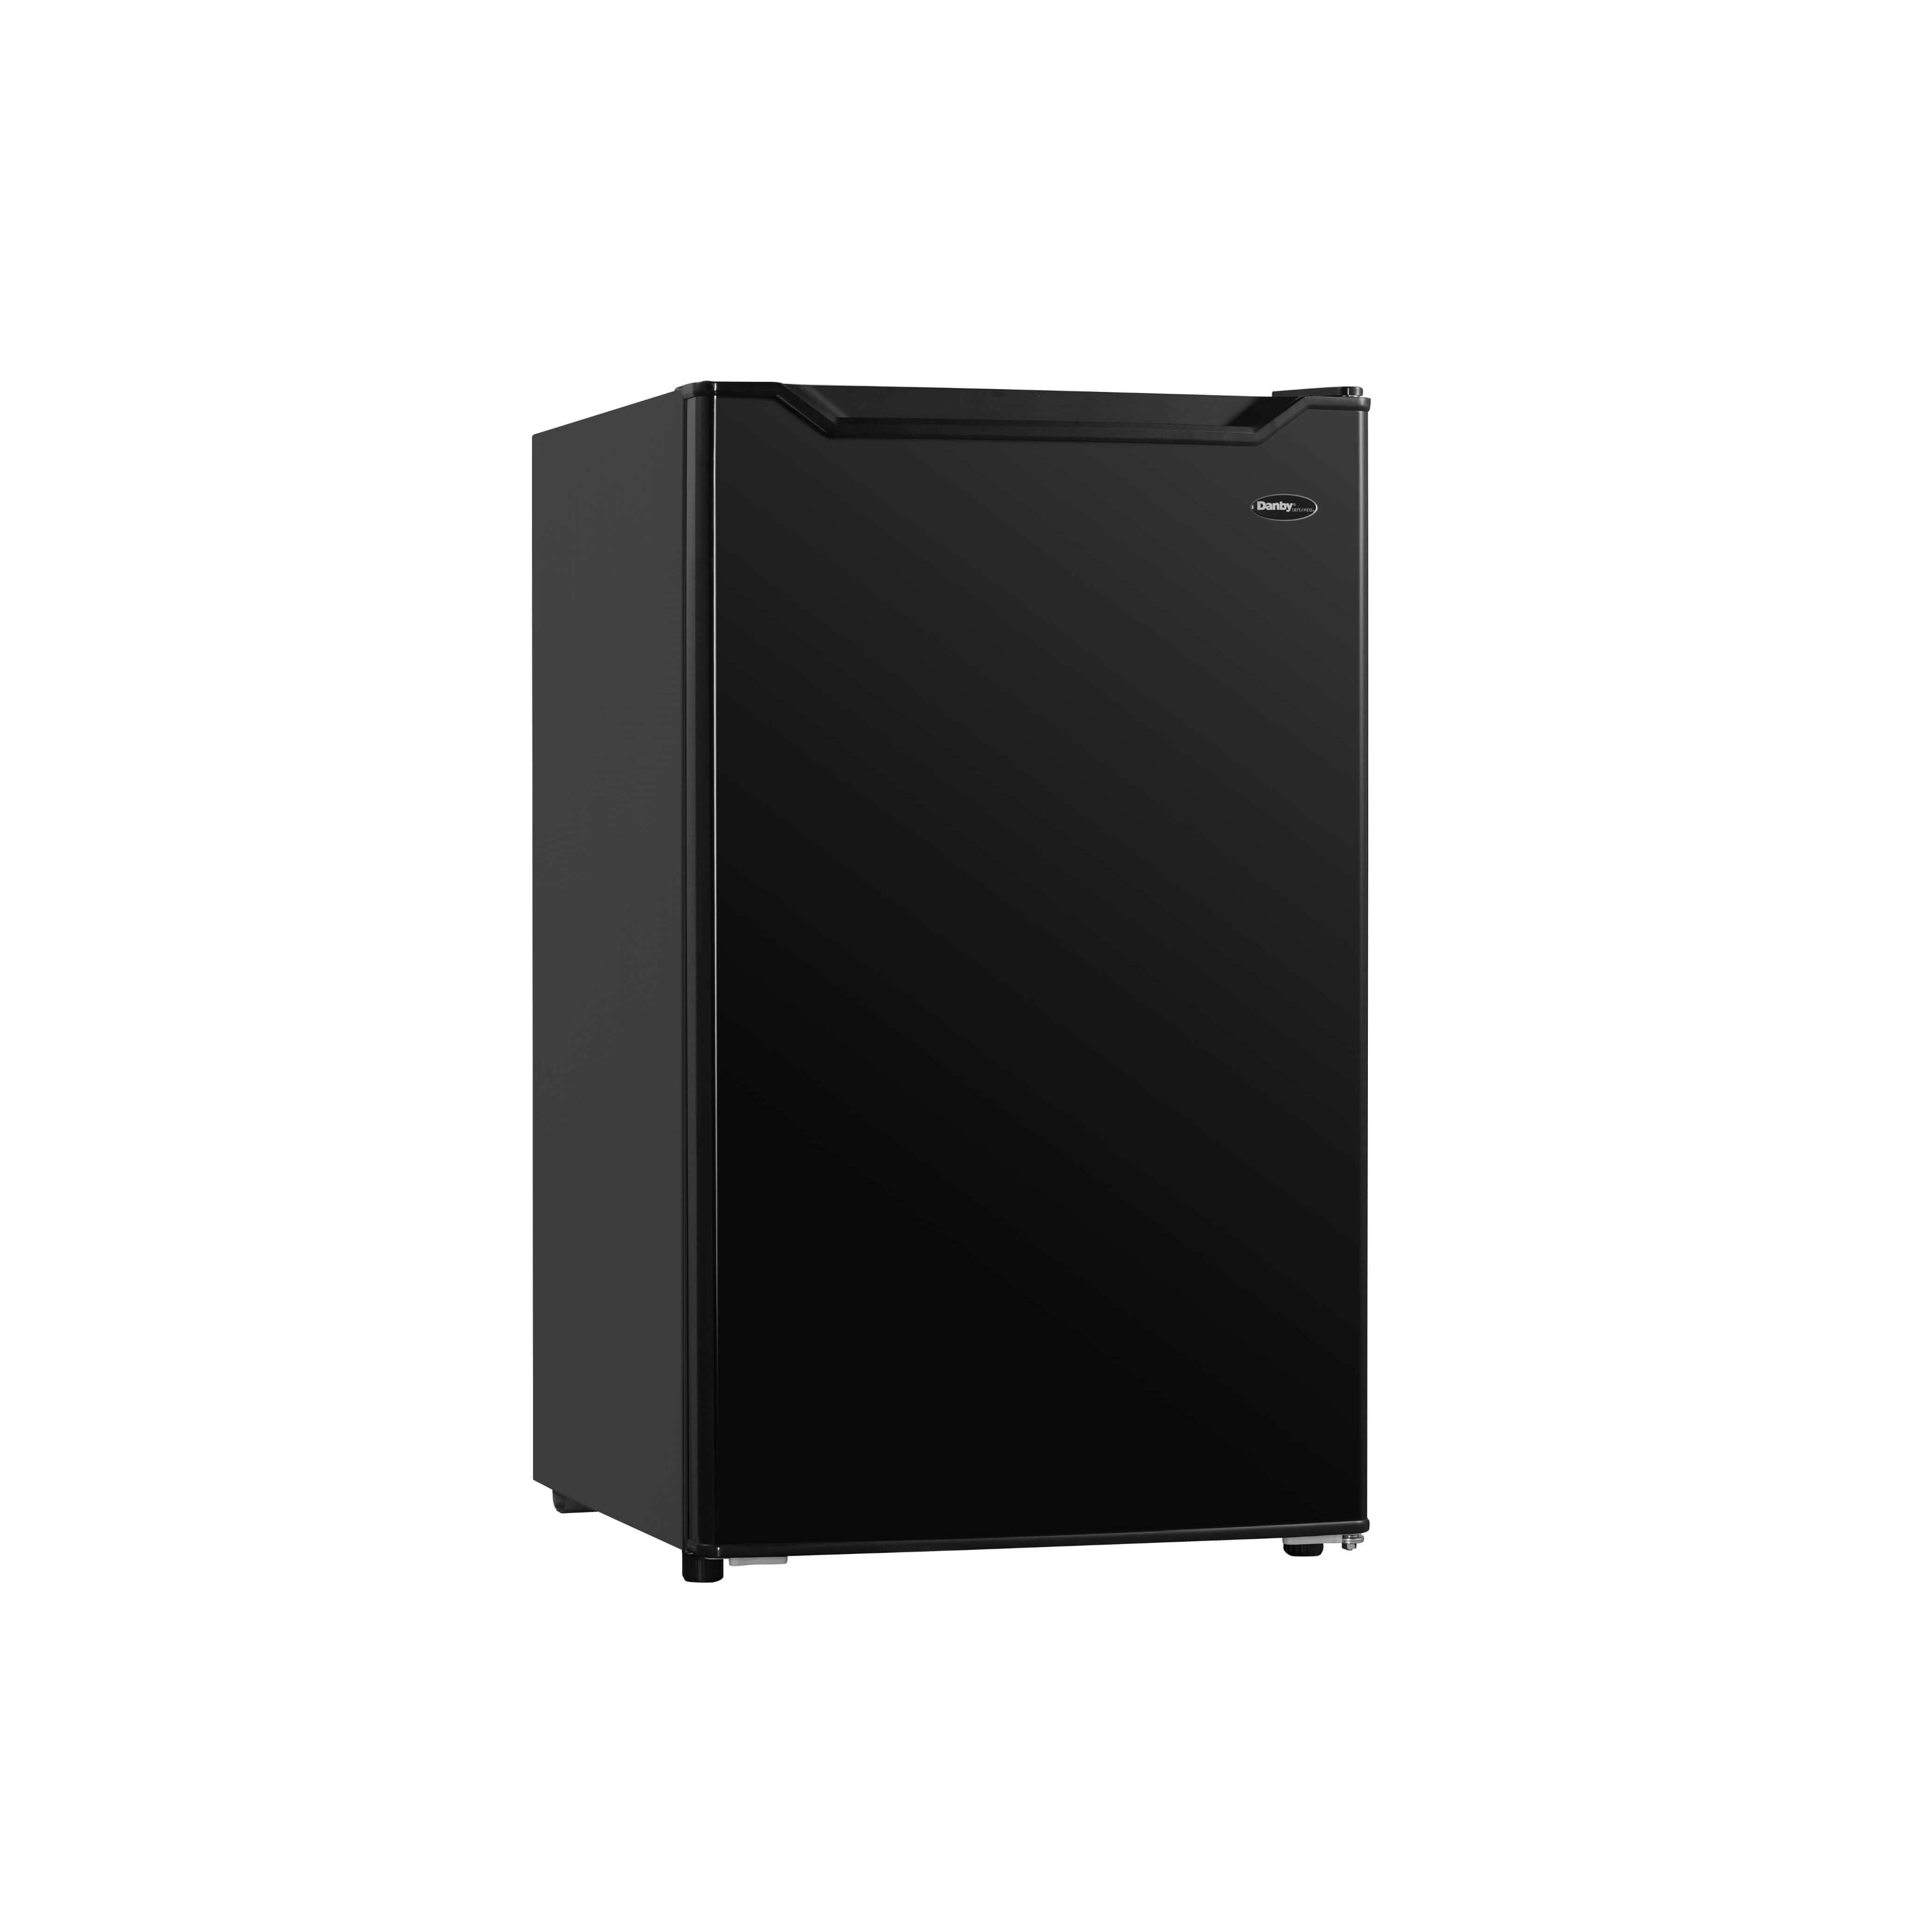 Diplomat Series DCR033B1BM Compact Refrigerator, 3.3 cu-ft Overall